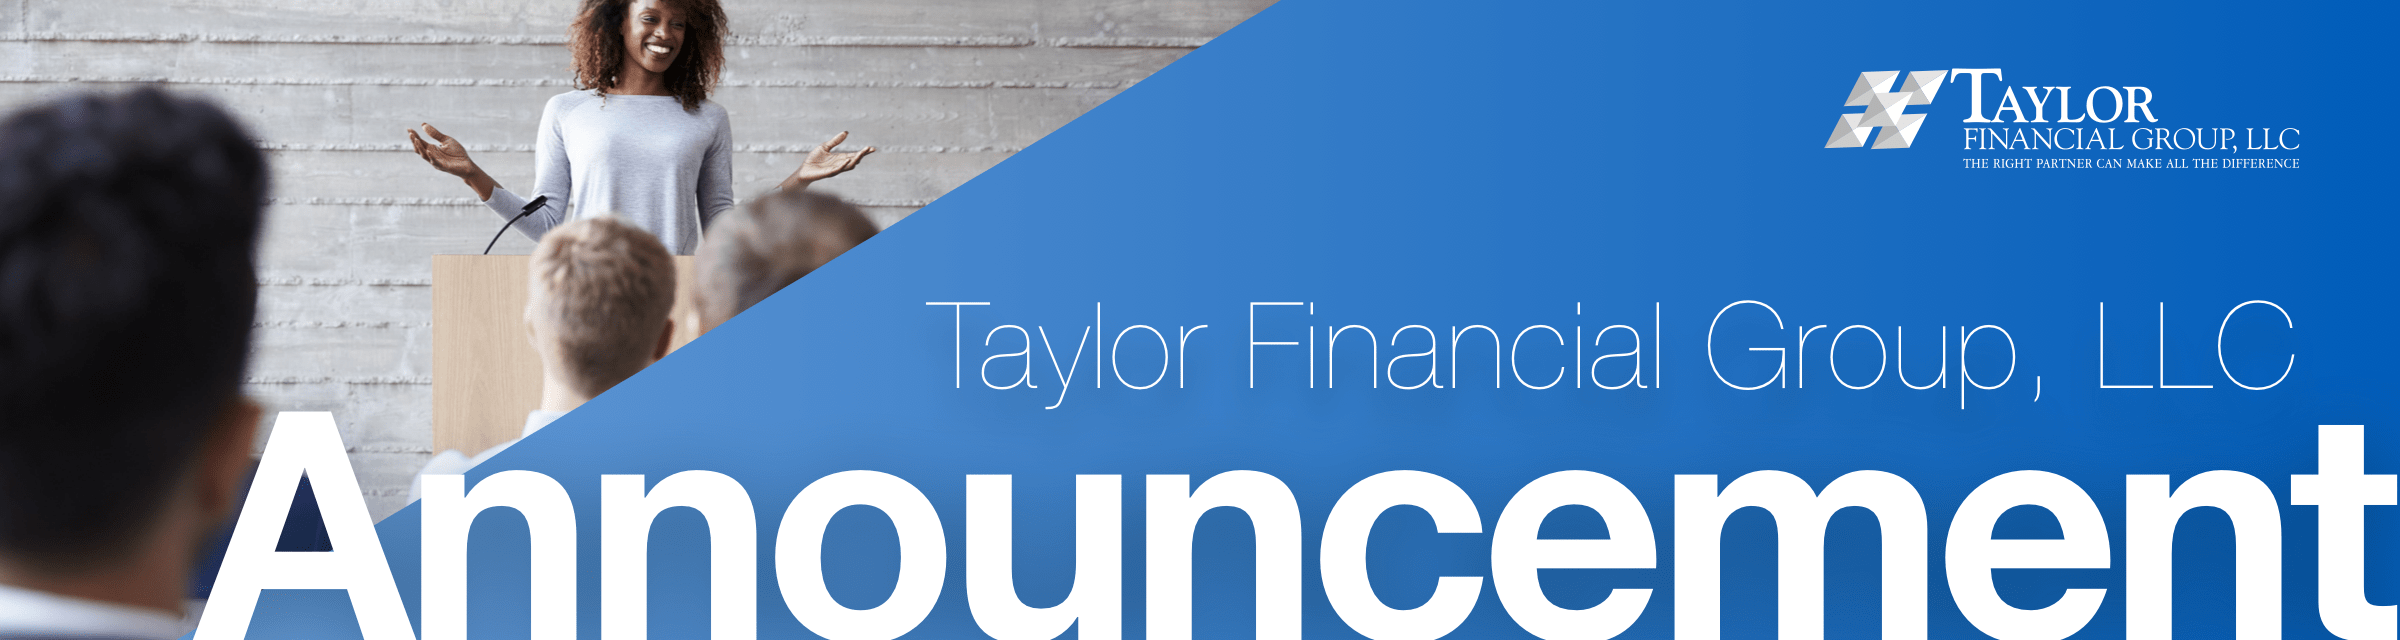 Taylor Finanacial Group, LLC Announcement